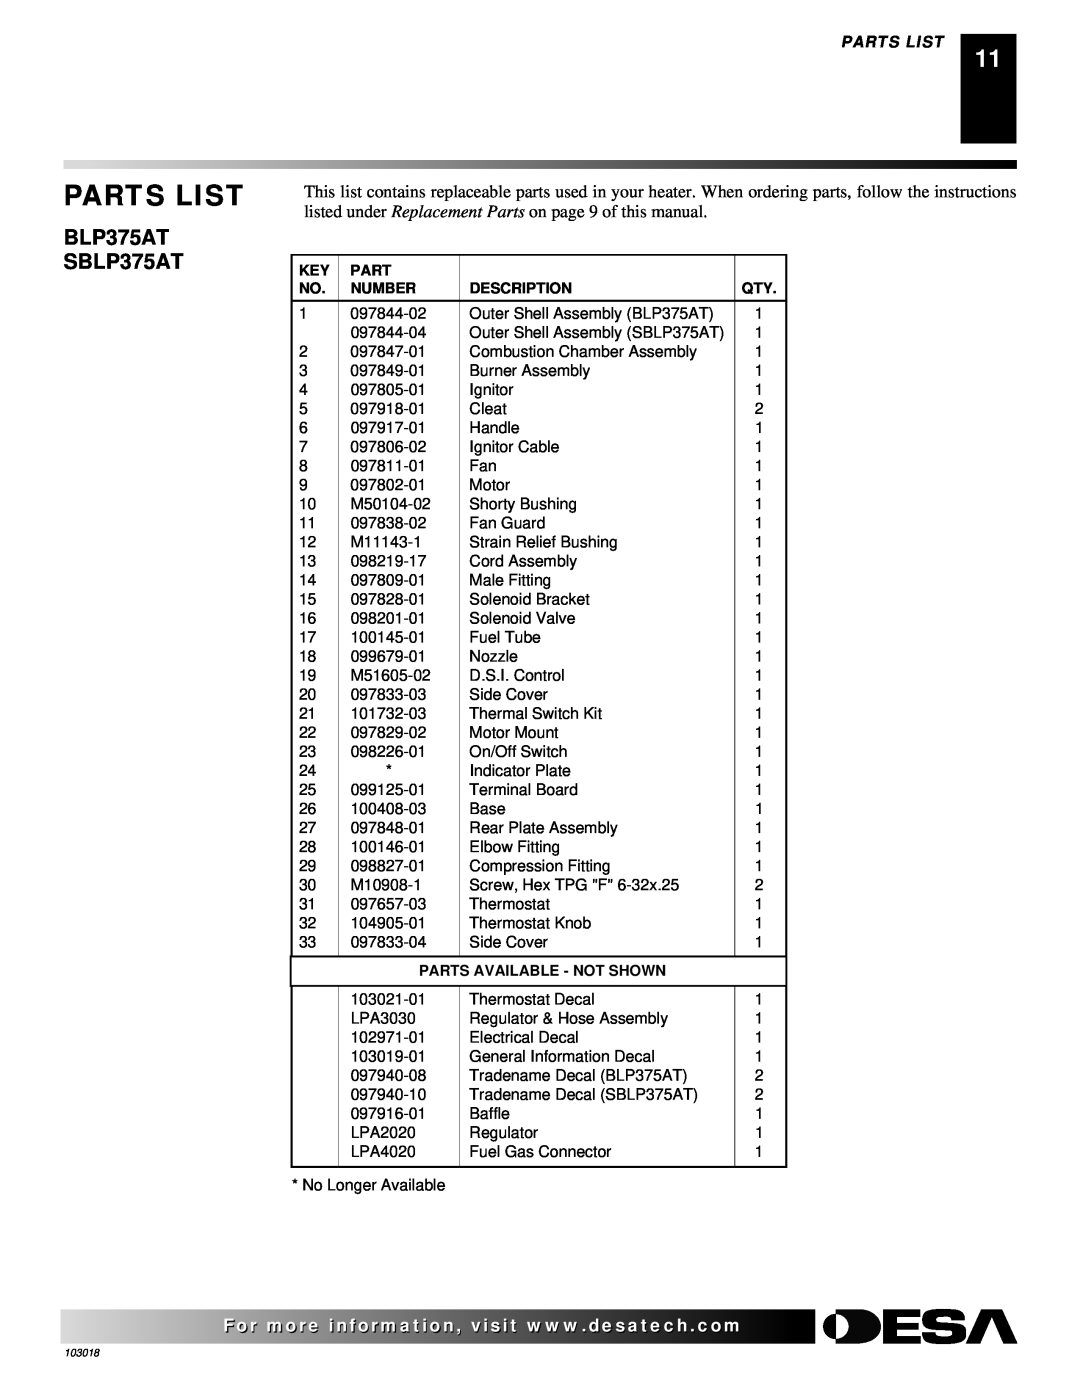 Desa AT Series owner manual Parts List 